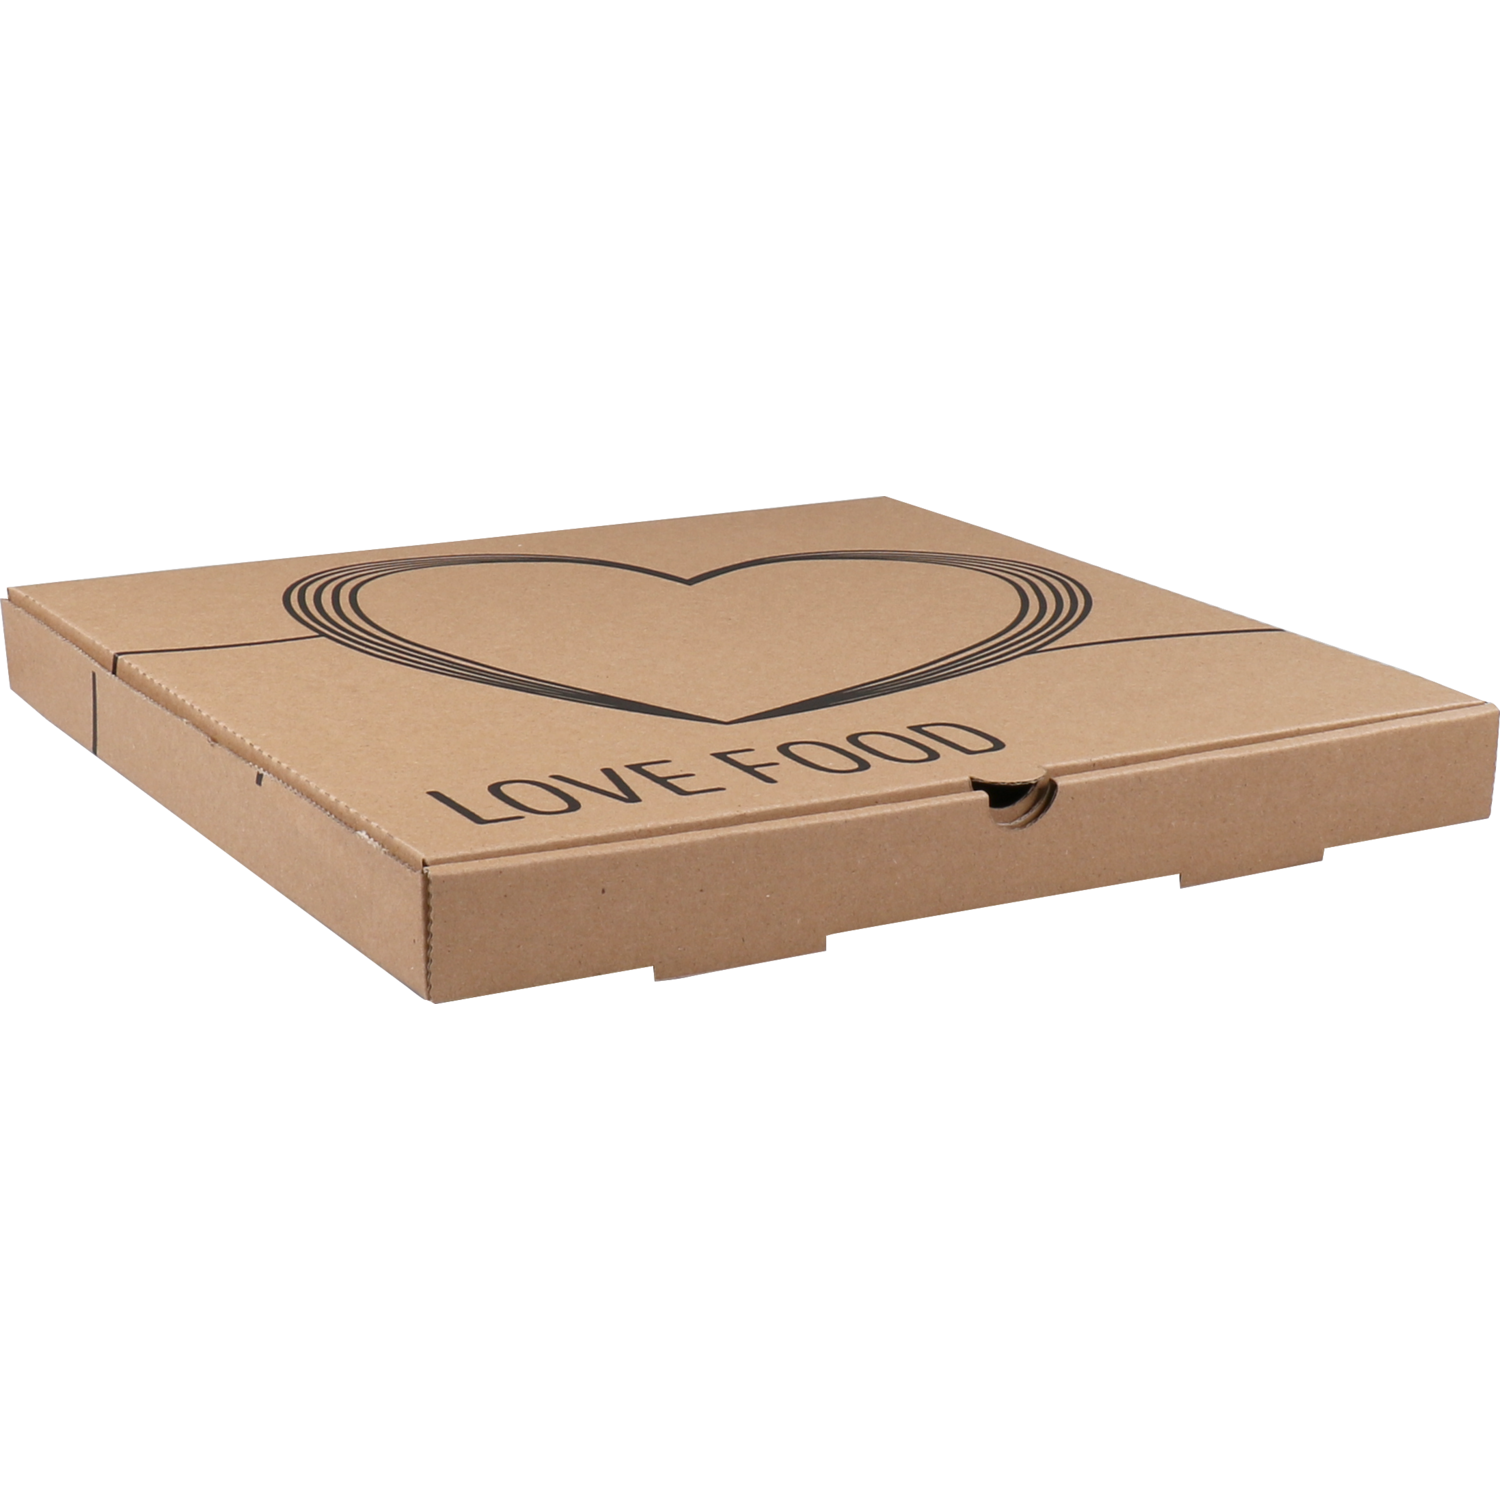  Boîte pizza, Americano Love Food, carton ondulé, 30x30x3cm, americano, brun 1